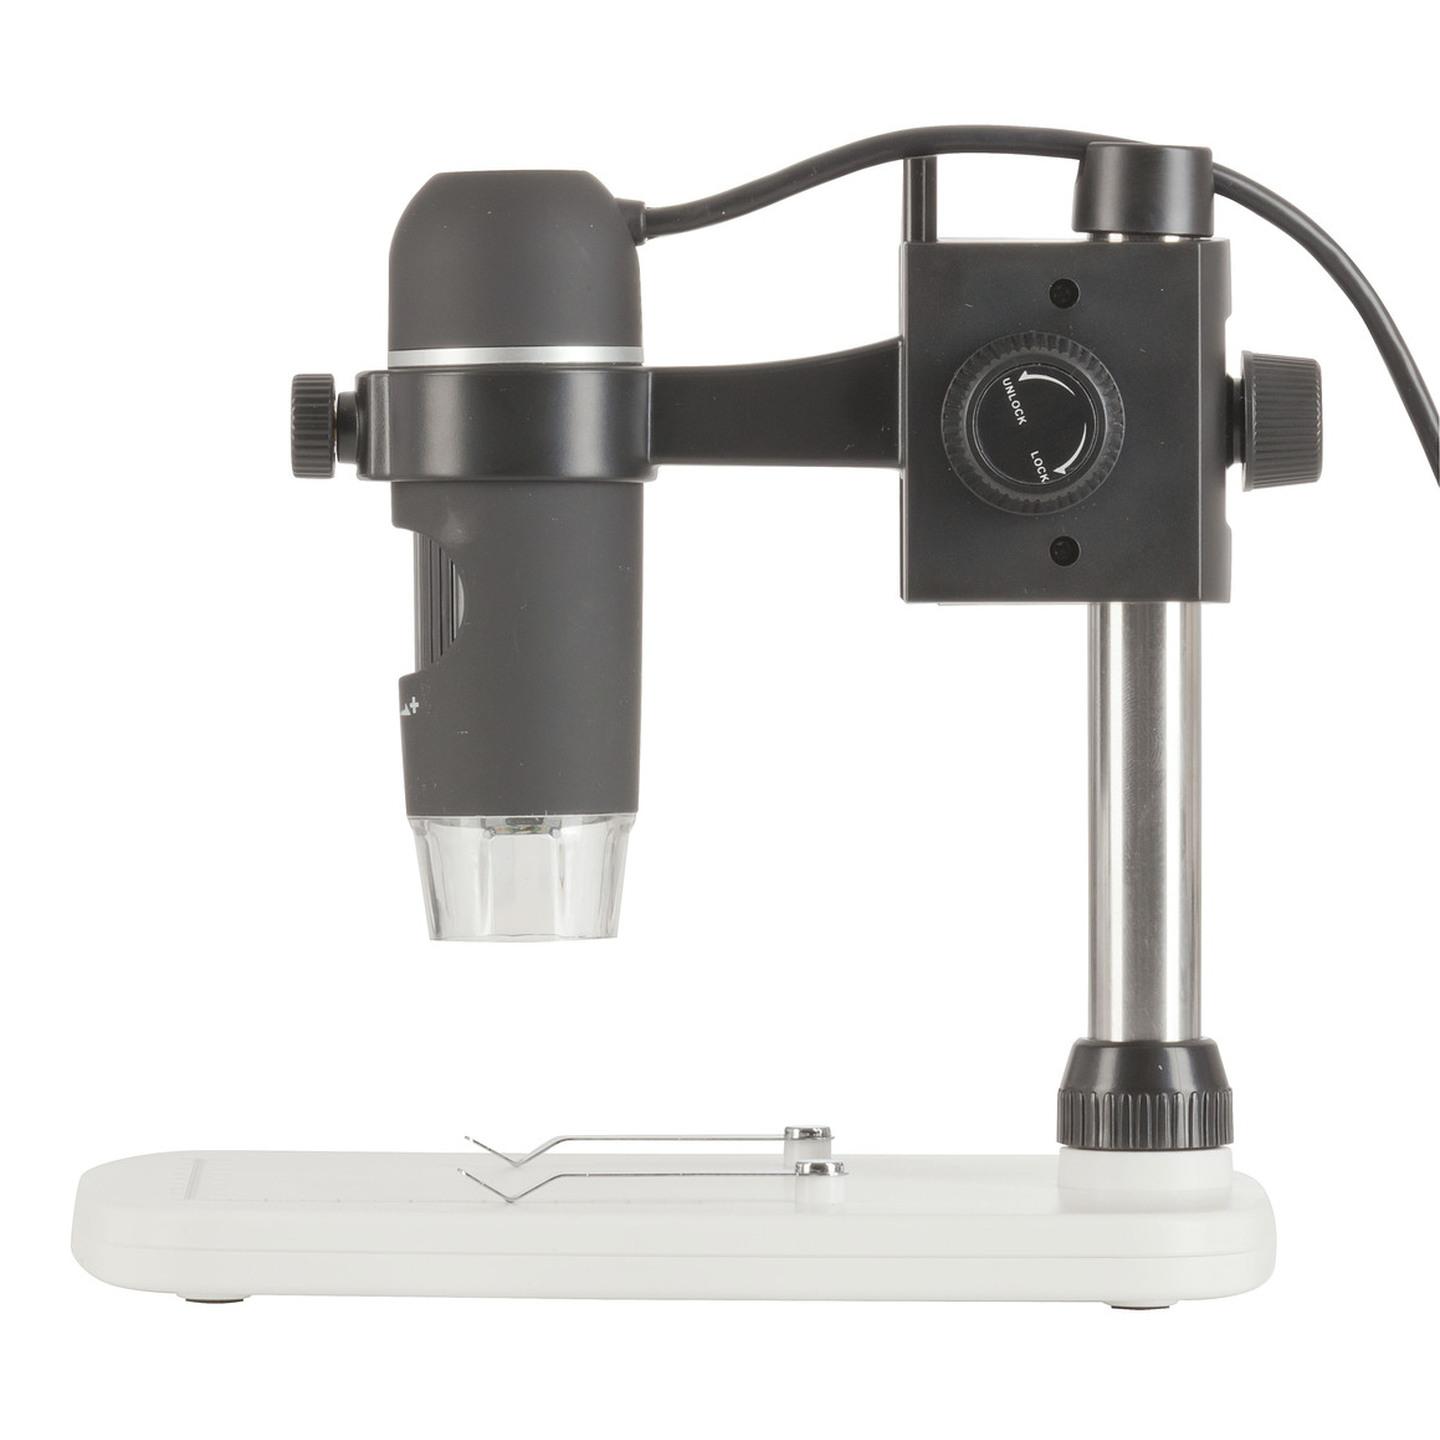 Digitech 5MP USB Digital Microscope